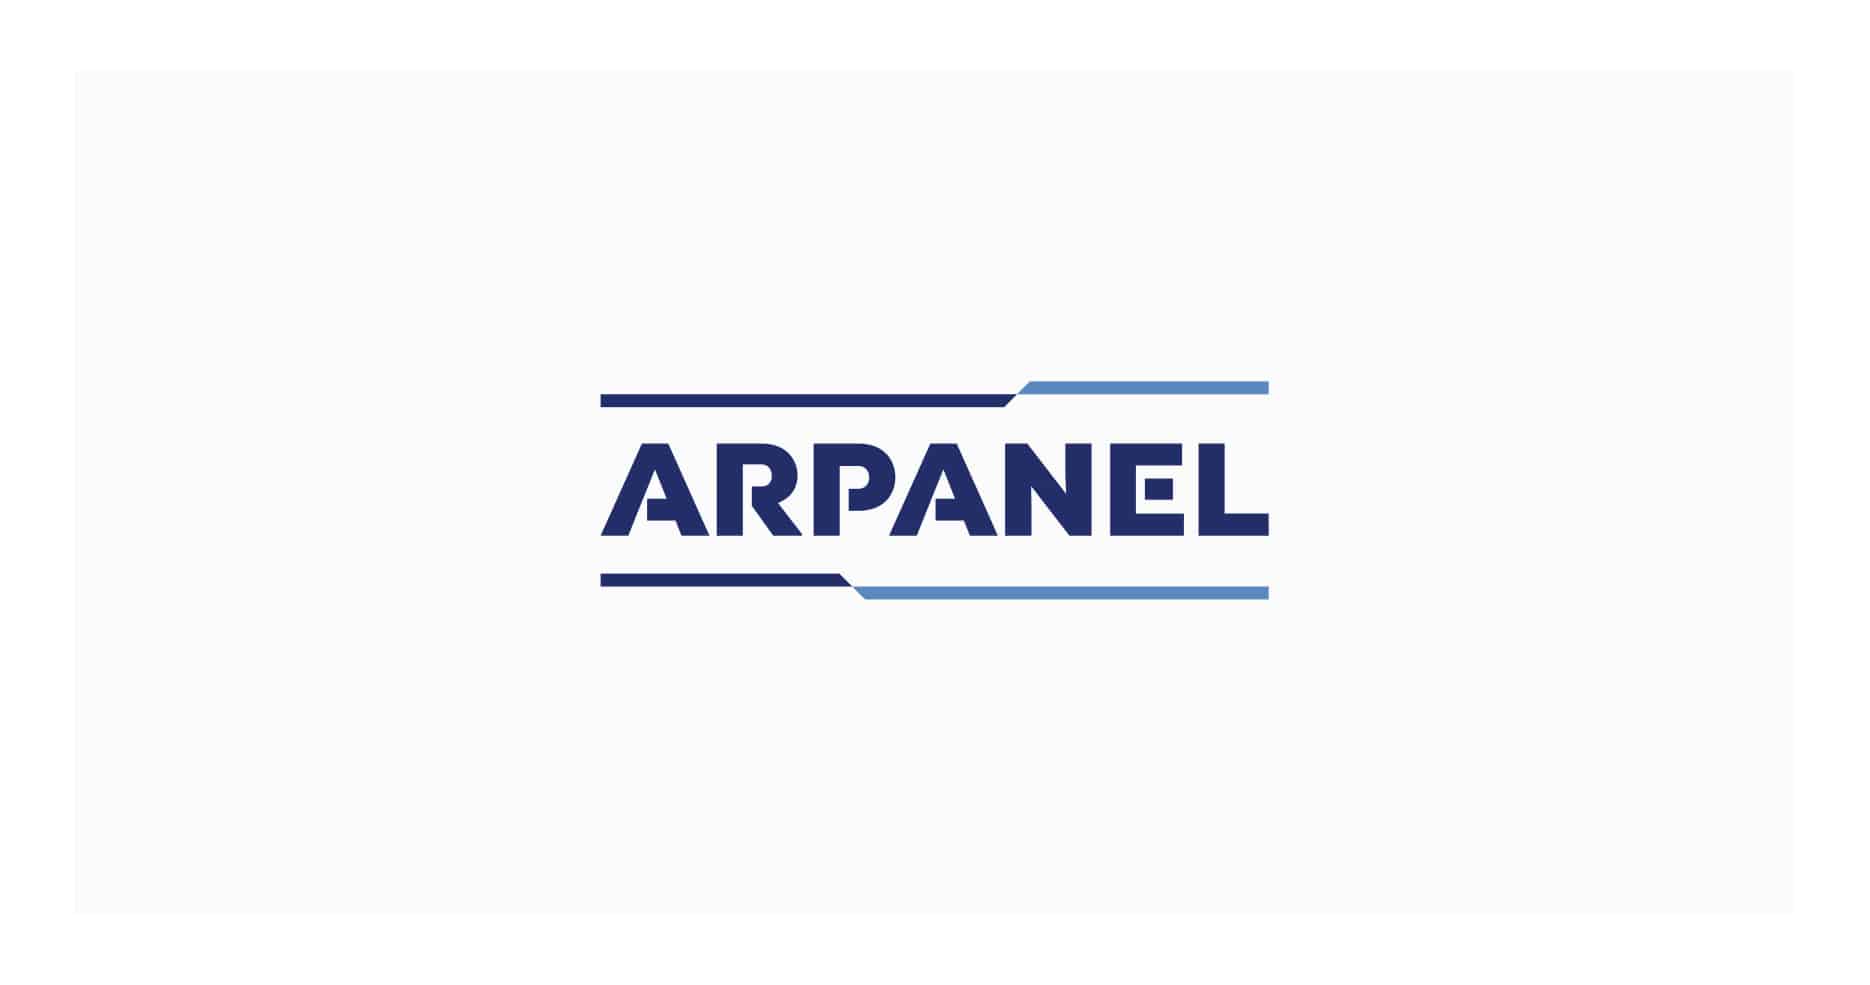 ARPANEL logo